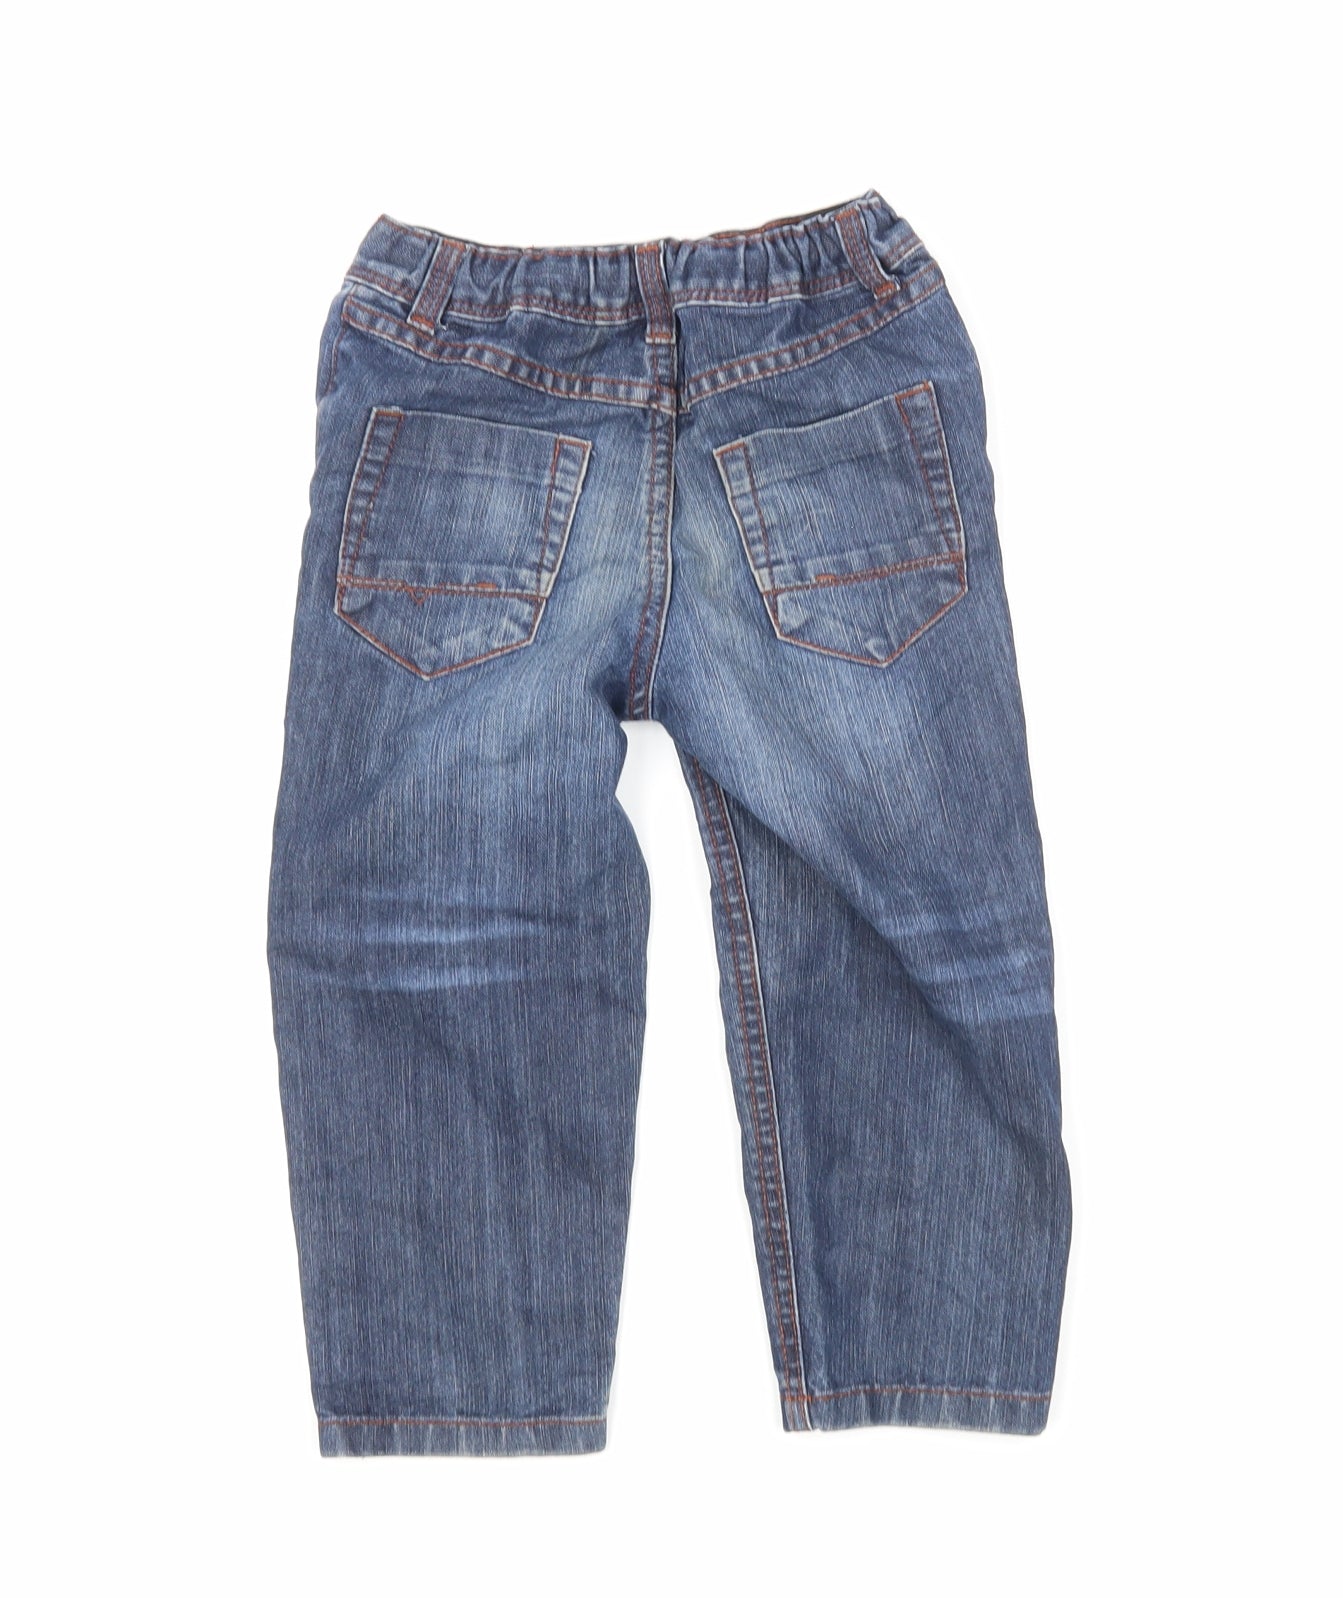 Nutmeg Boys Blue  Cotton Straight Jeans Size 2-3 Years  Regular